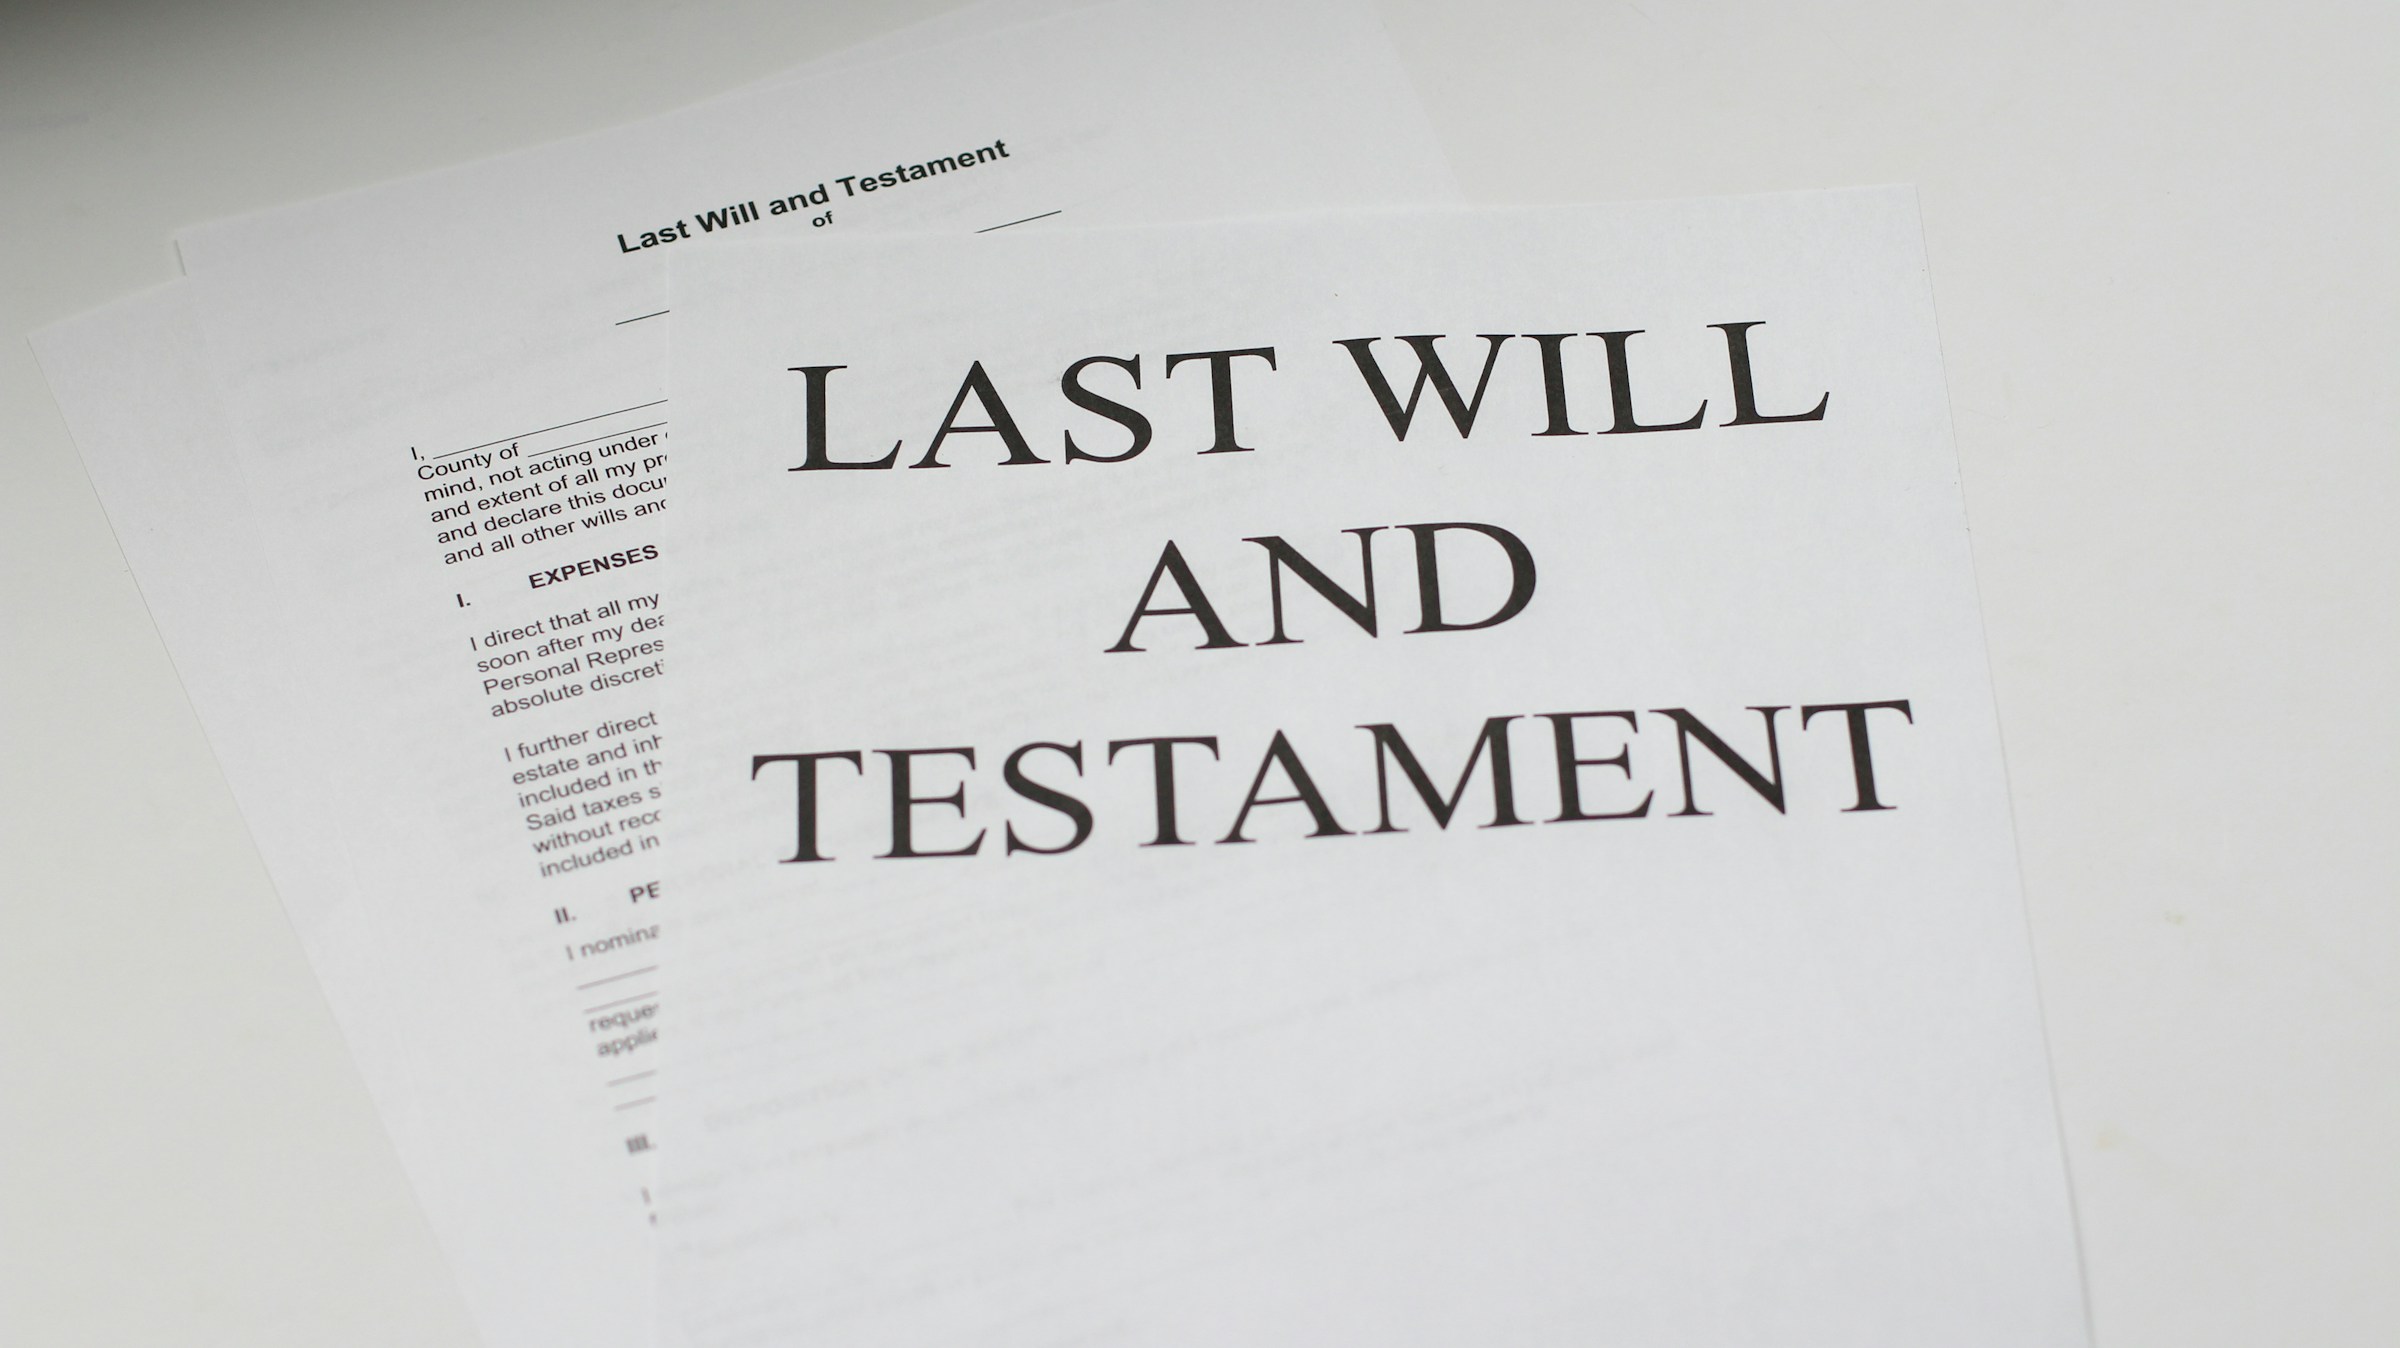 Will and testament paperwork | Source: Unsplash